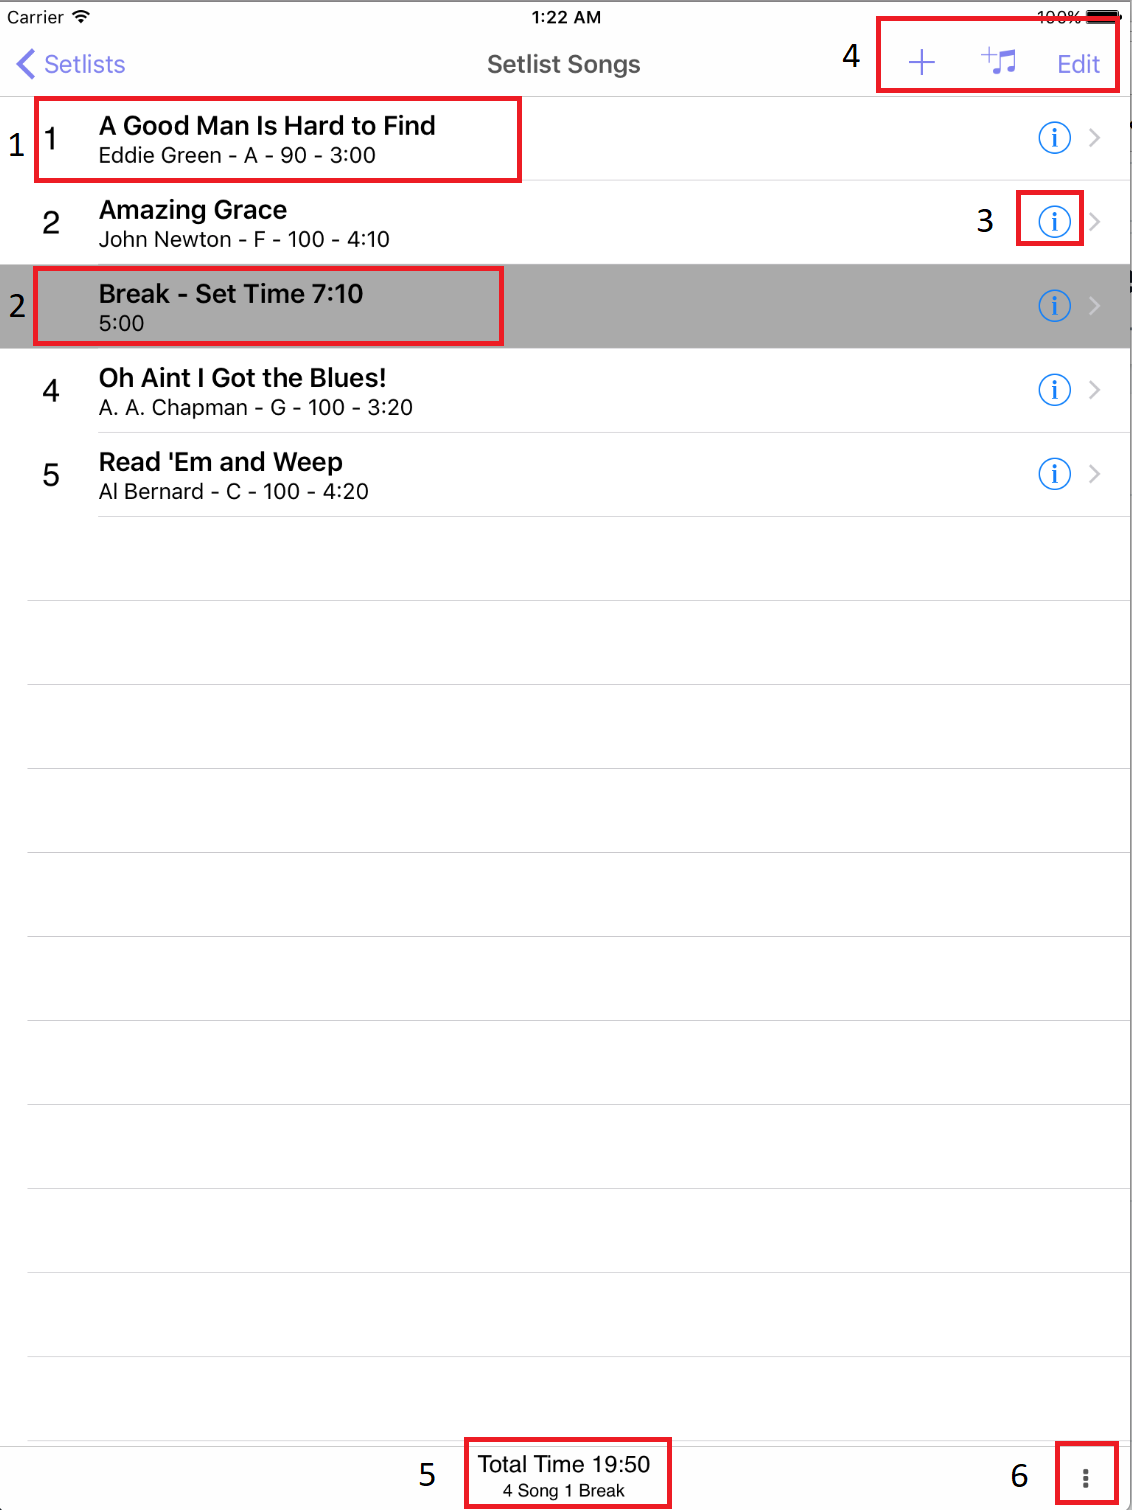 Setlist Songs View in Setlist Helper for iOS